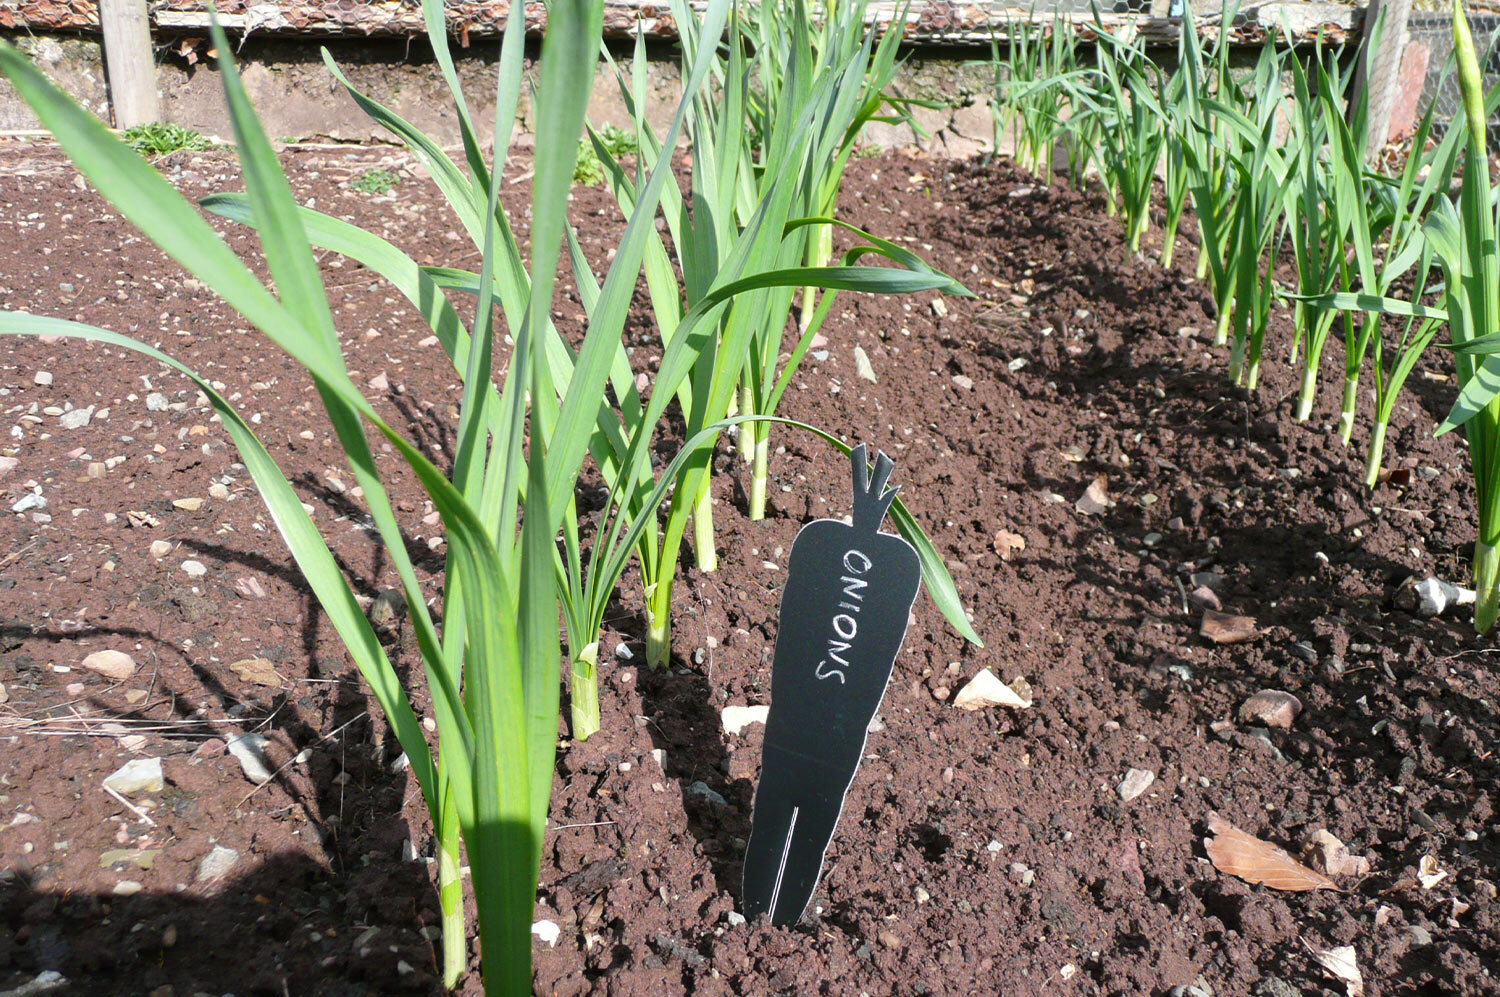 Blue-Marmalade-Grow-plant-label-recycled-plastic-onions.jpg